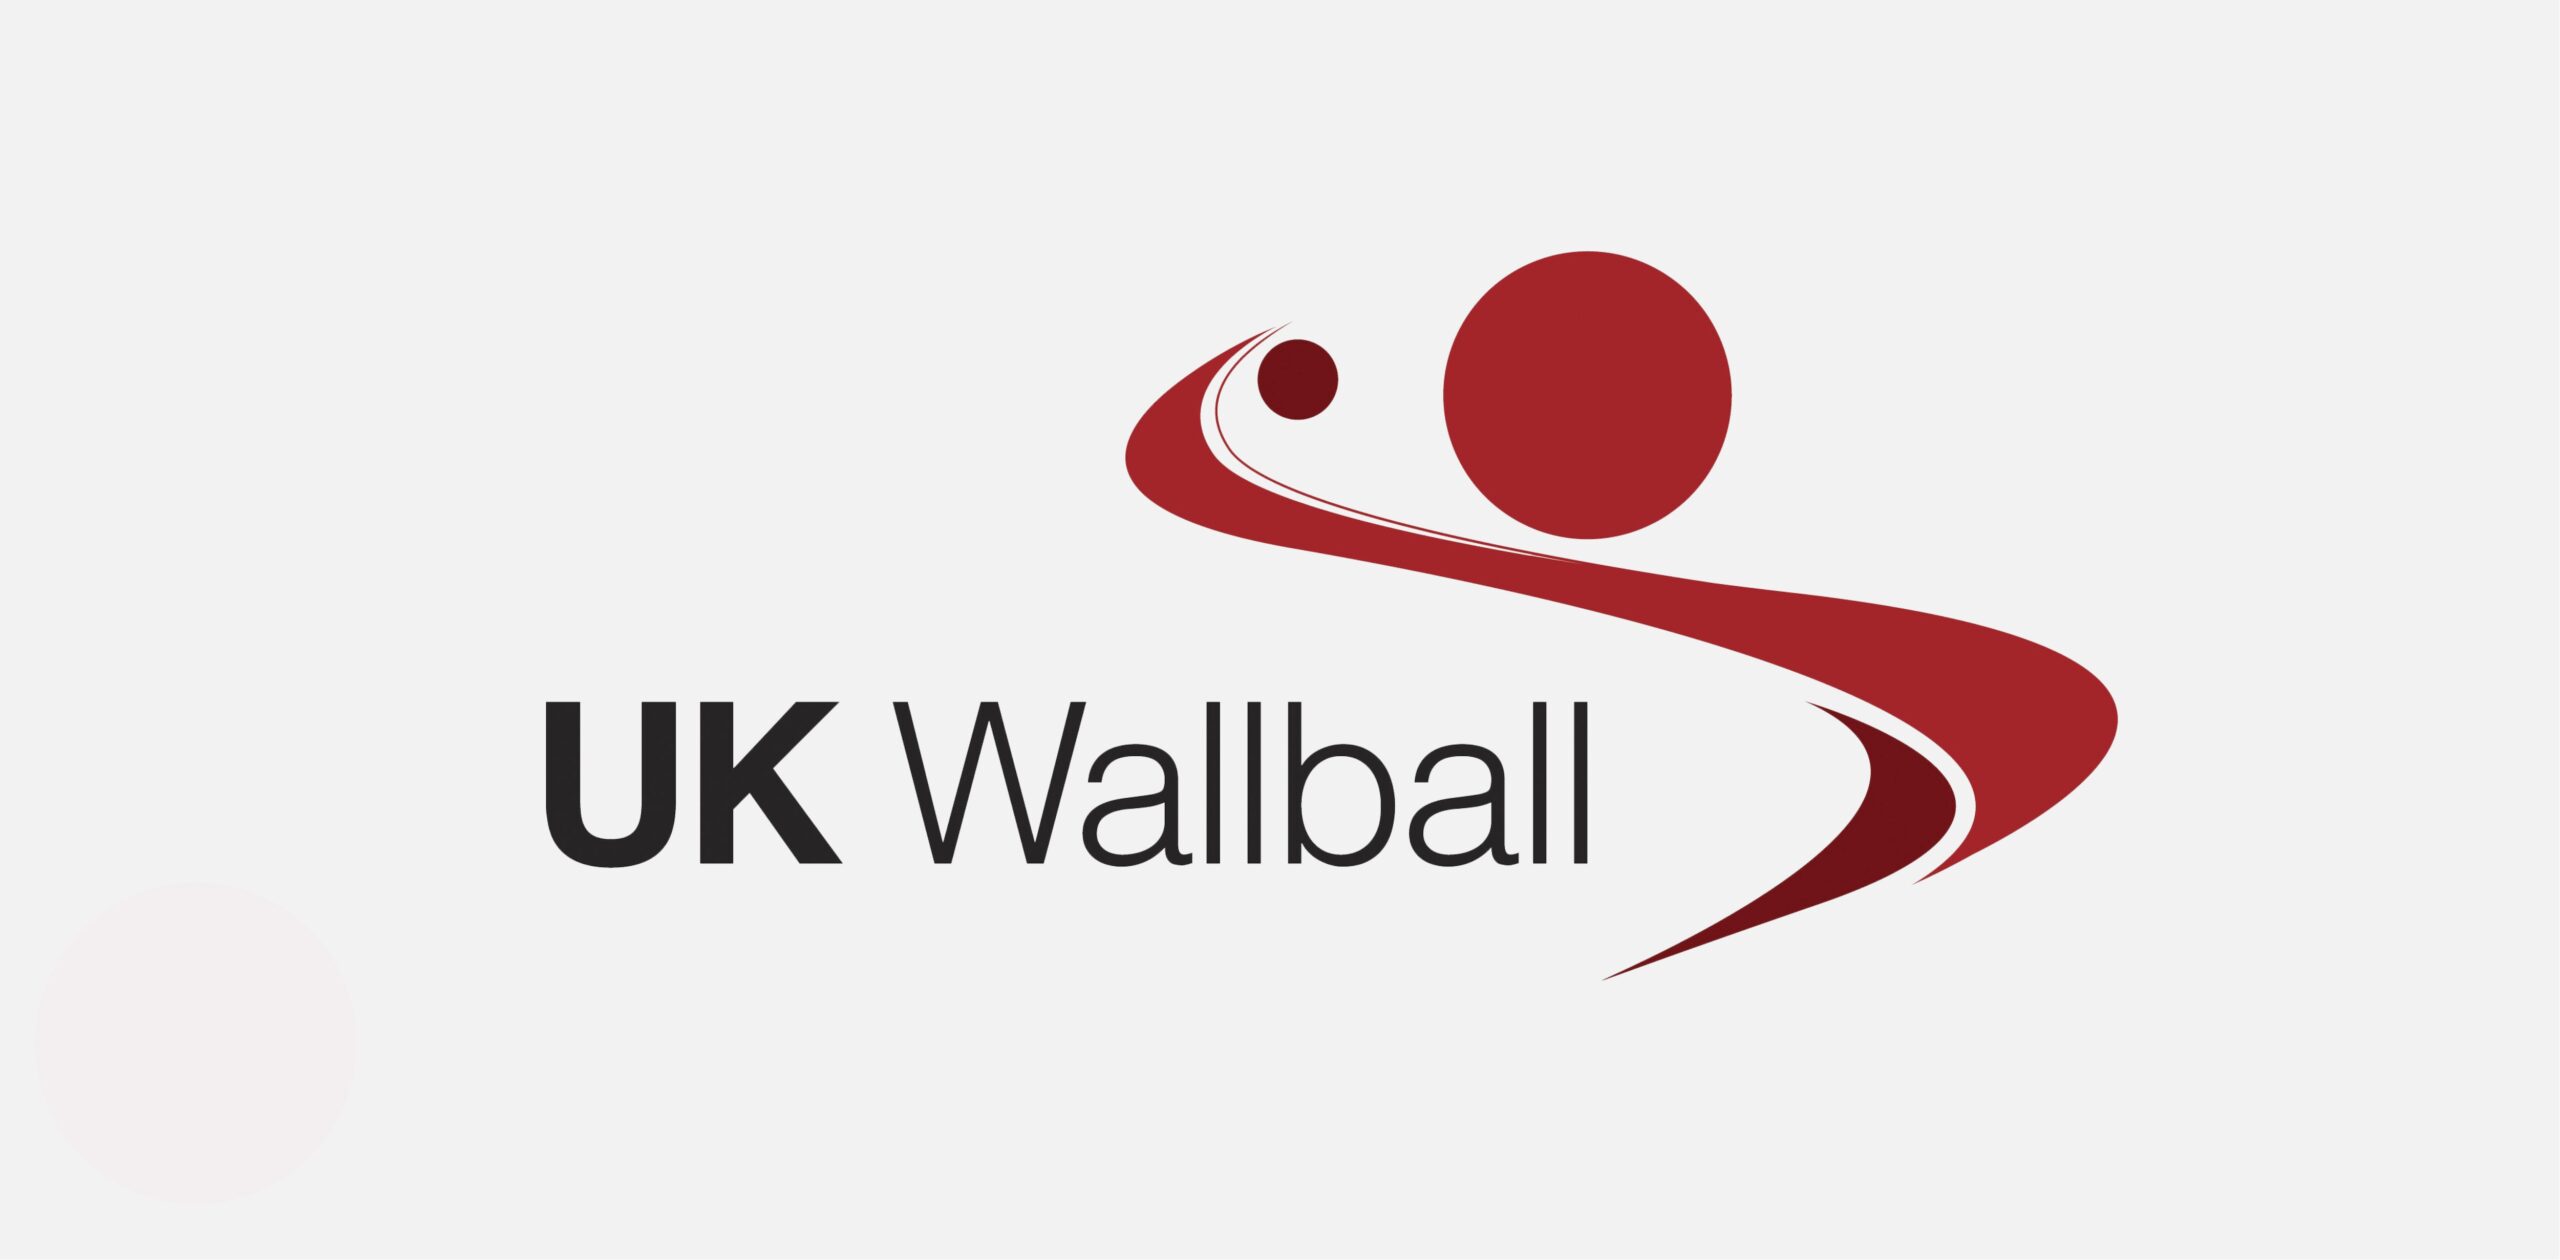 A new partnership with UK Wallball